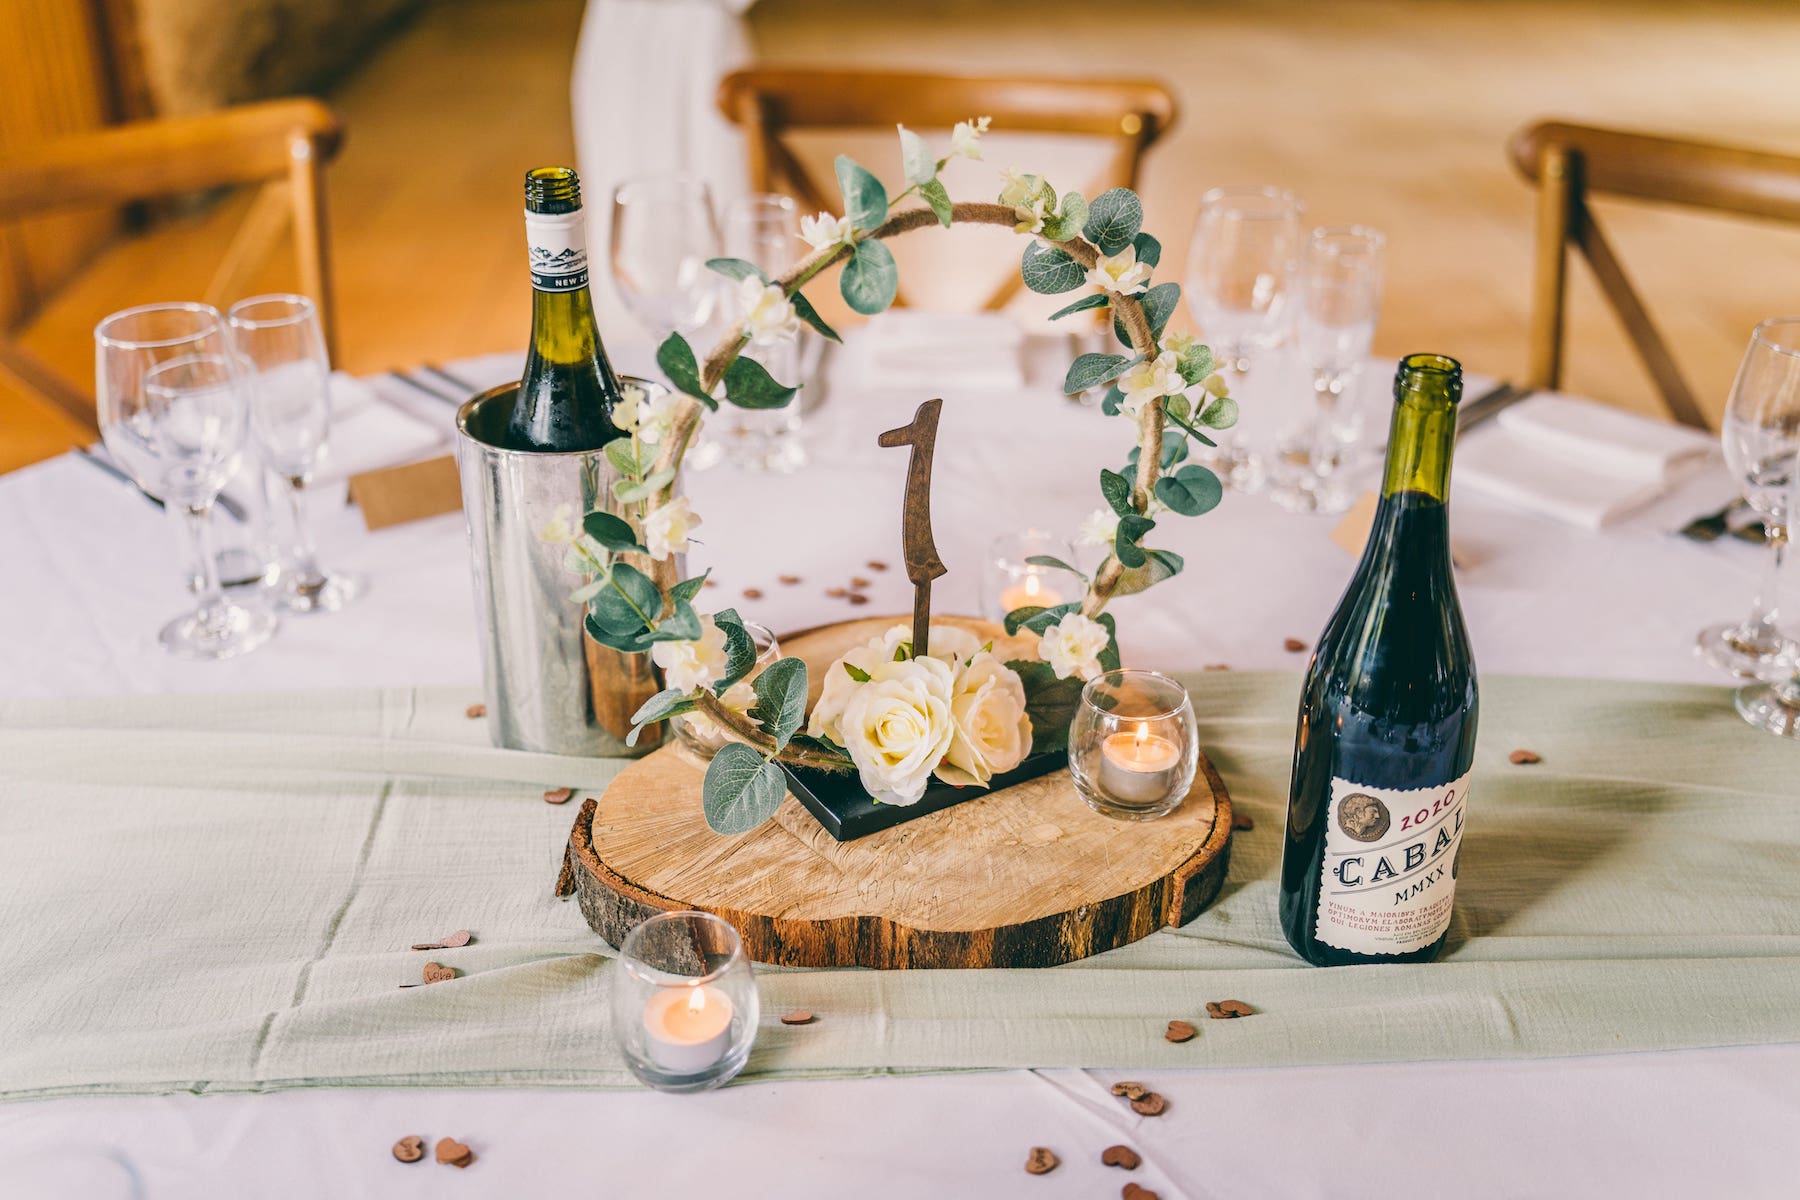 Wedding table decorations